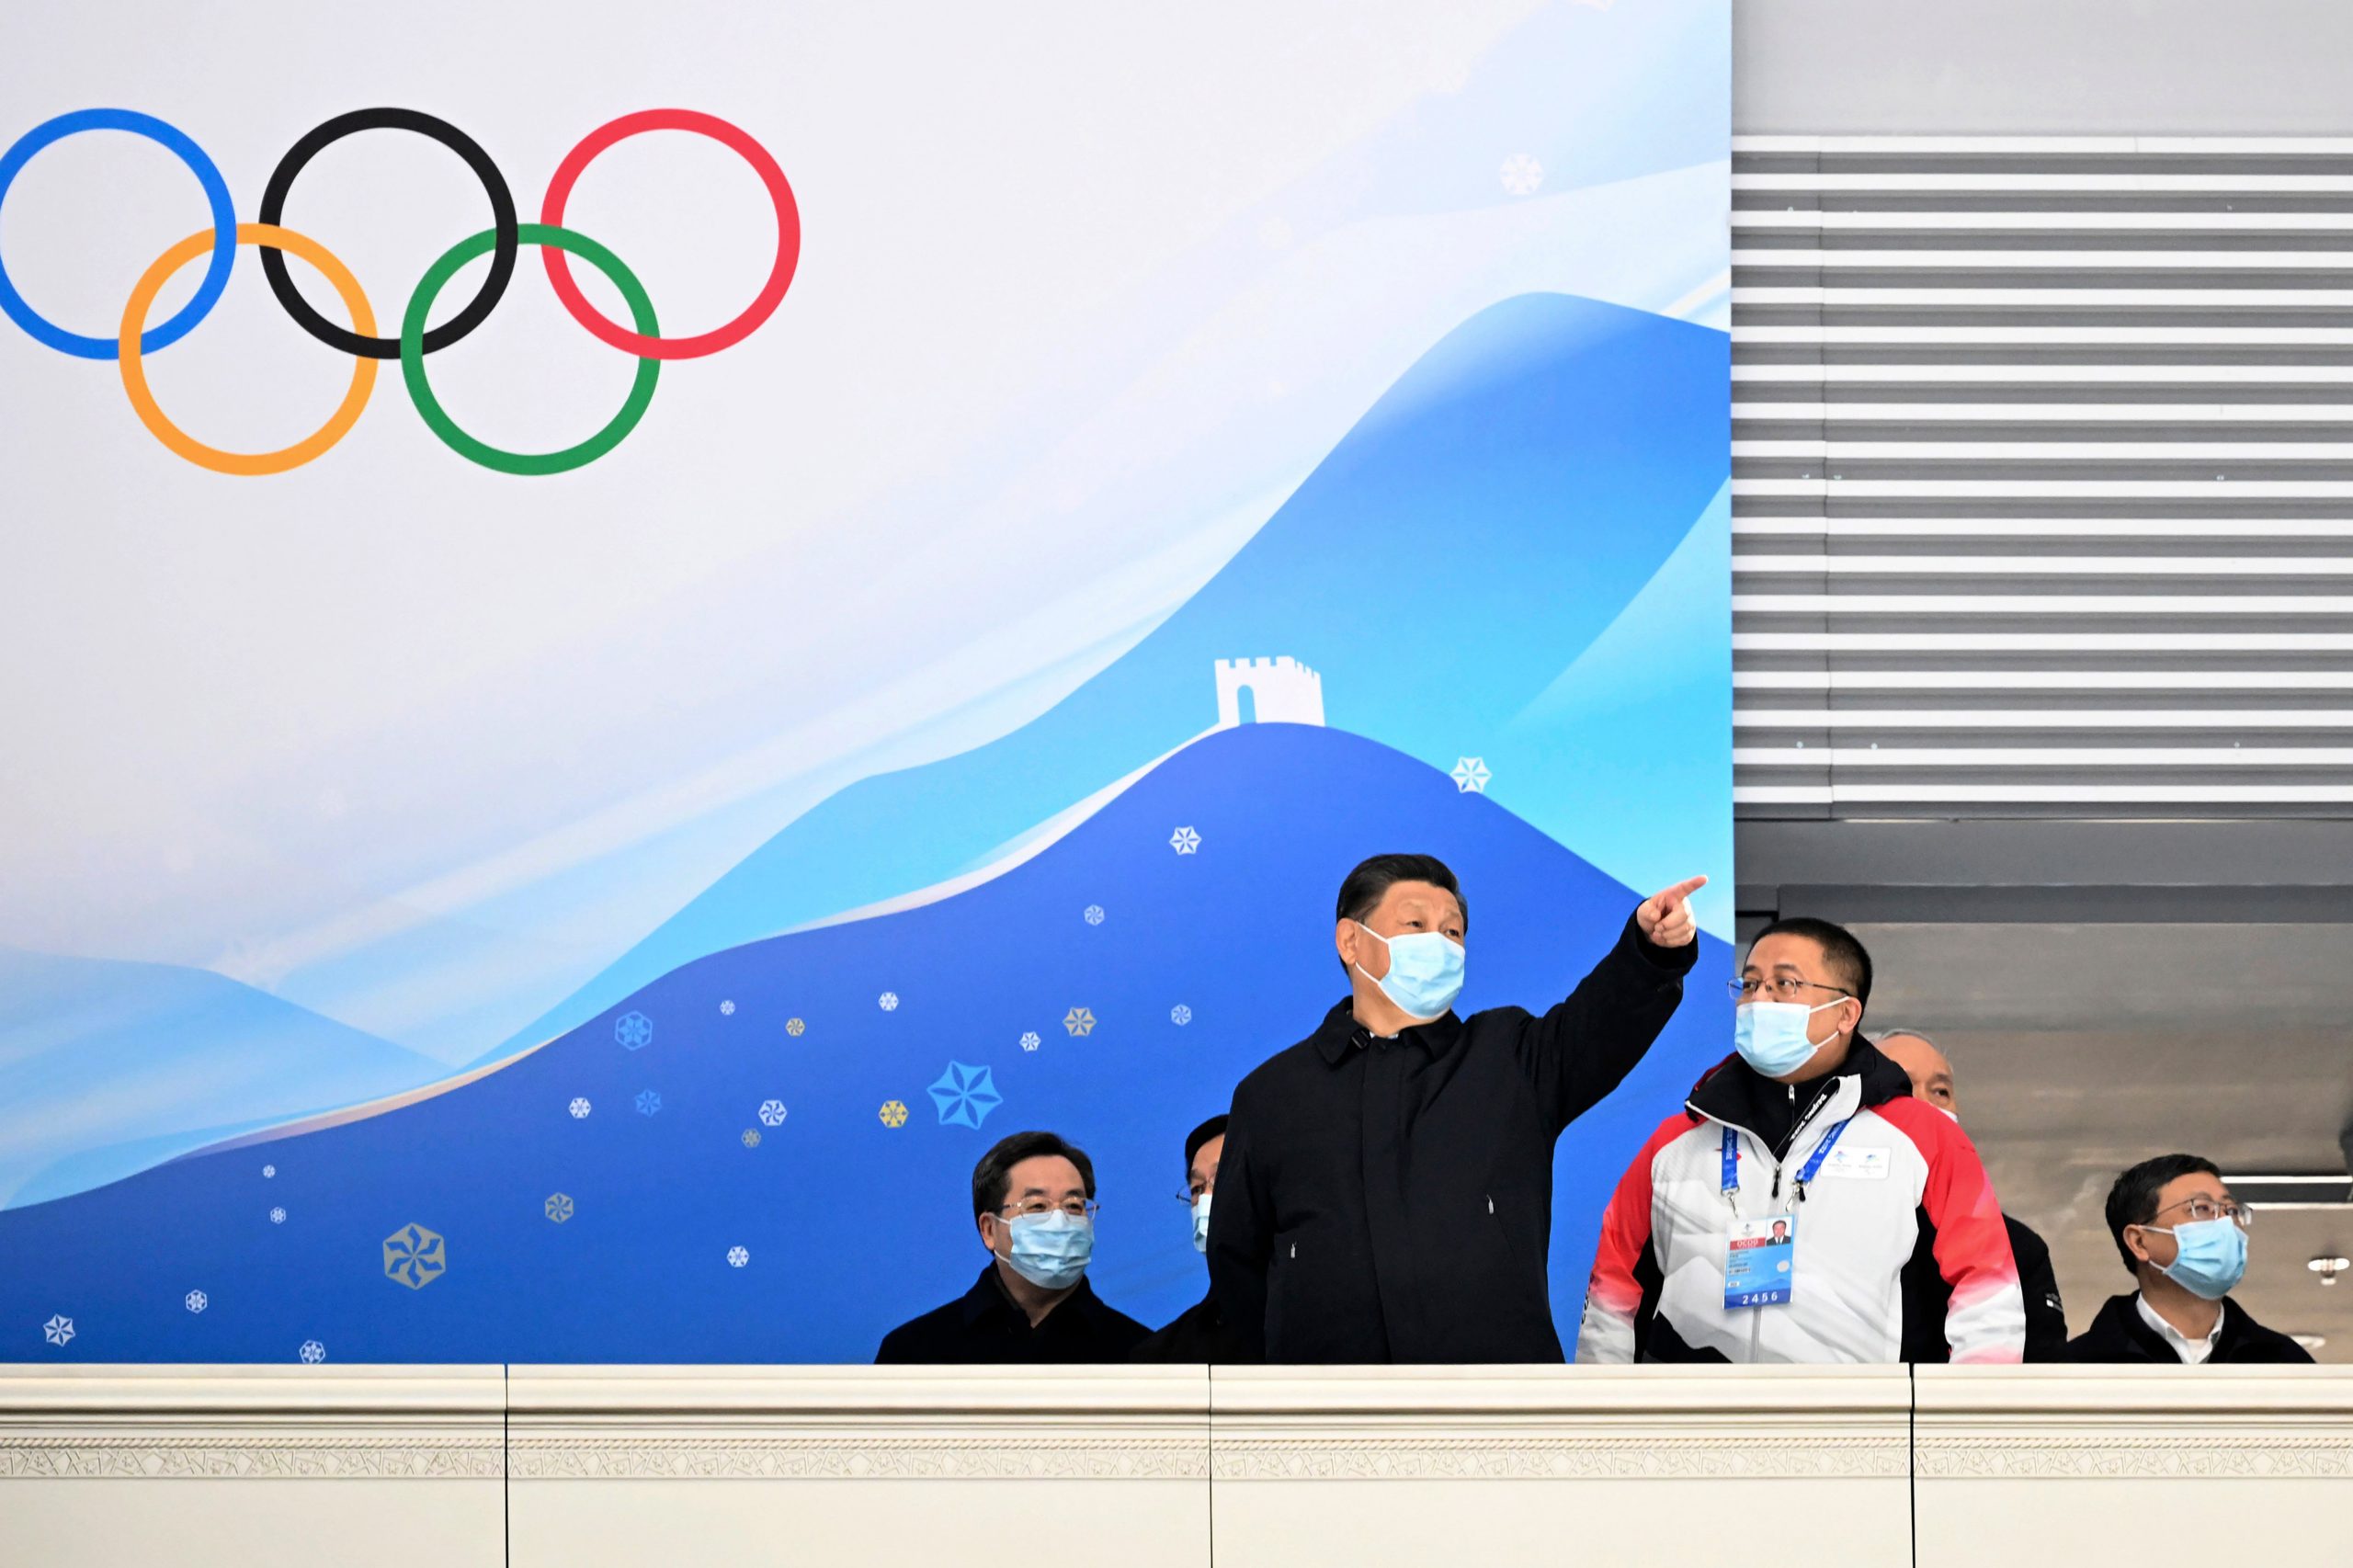 Winter Olympics in Beijing will go ahead as planned: IOC